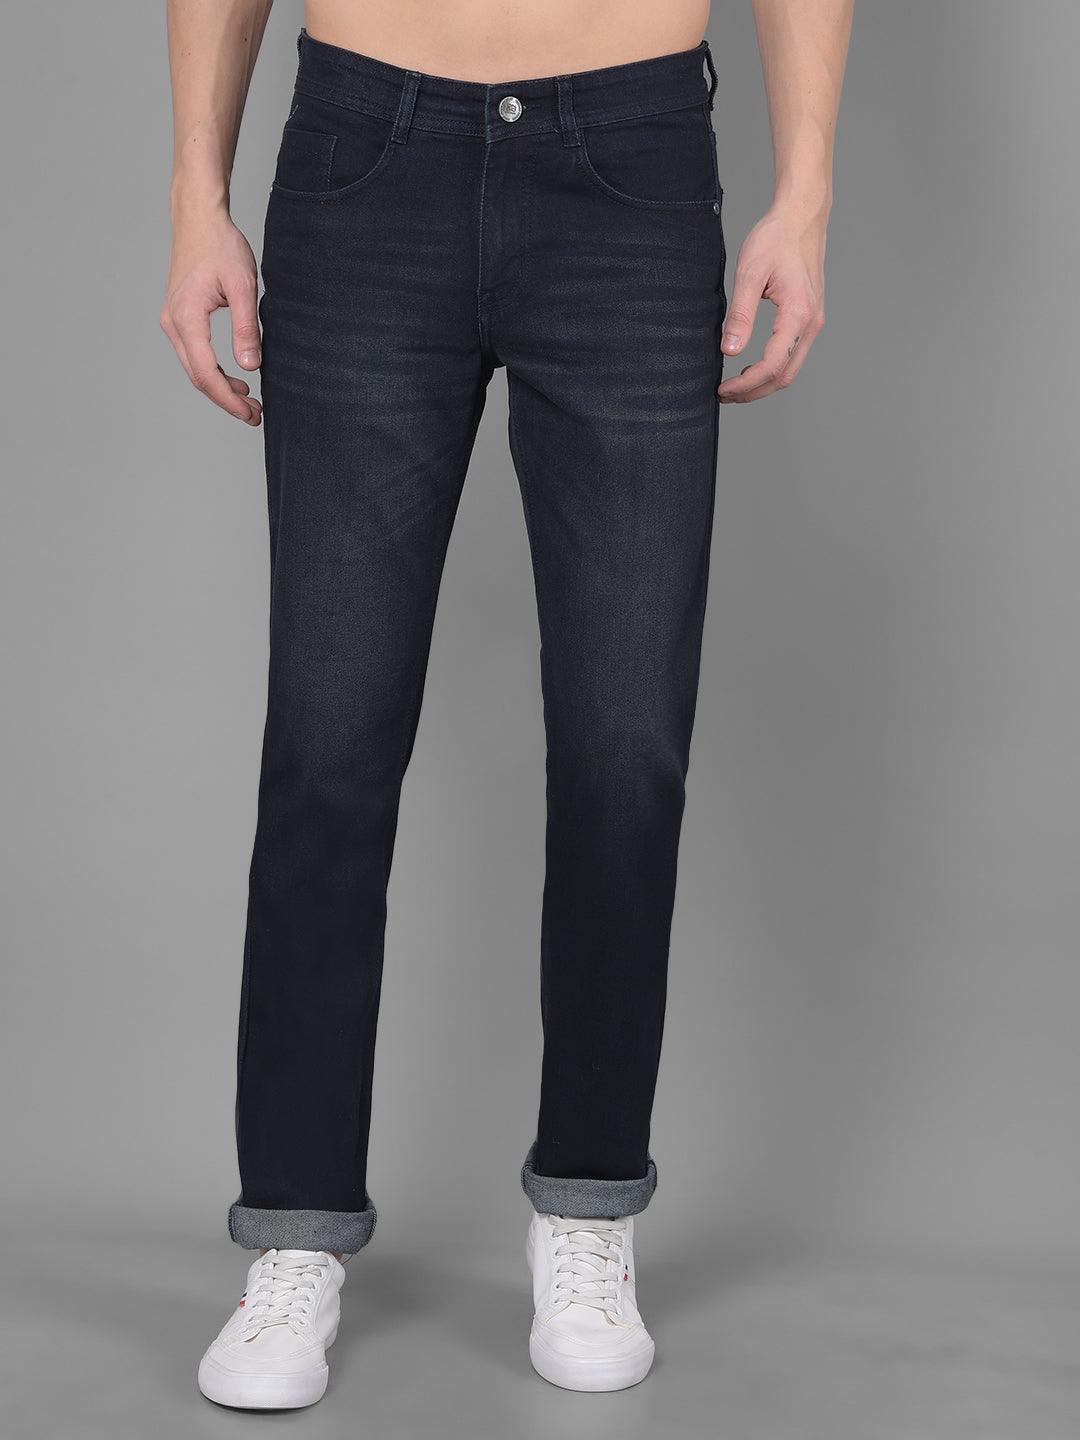 cobb navy blue narrow fit jeans